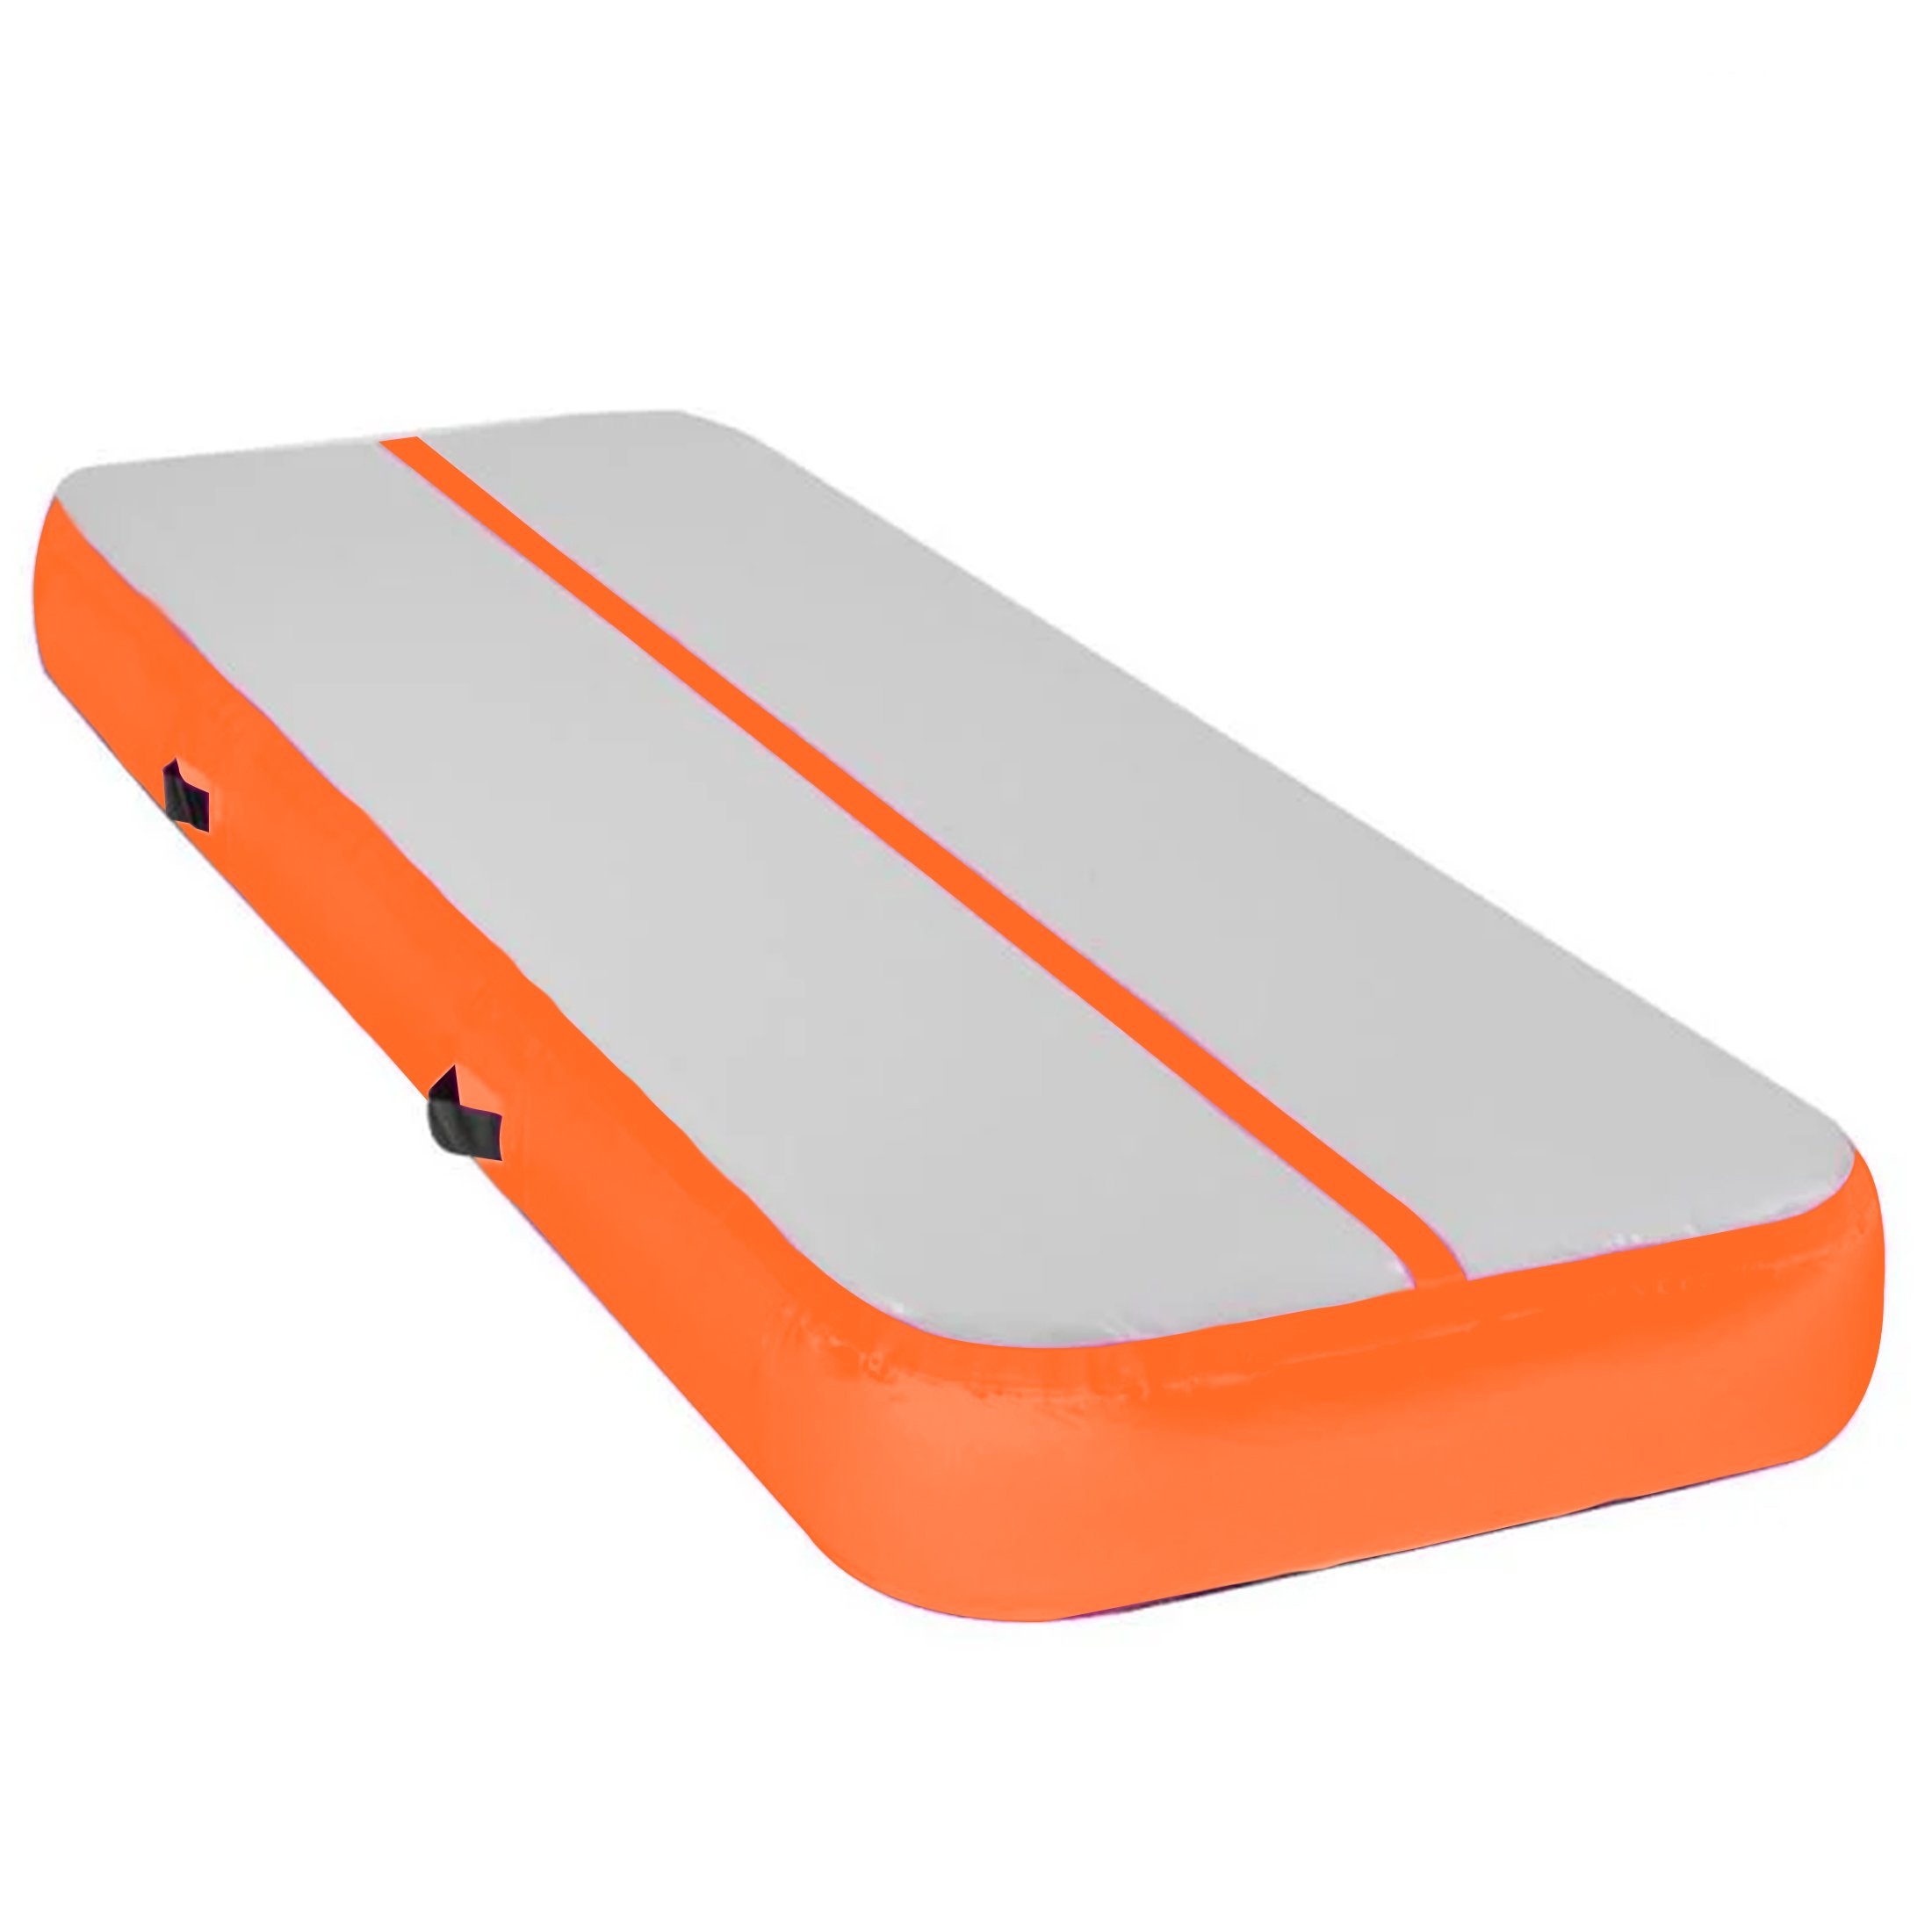 3m x 1m Air Track Inflatable Tumbling Mat Gymnastics - Orange Grey 2